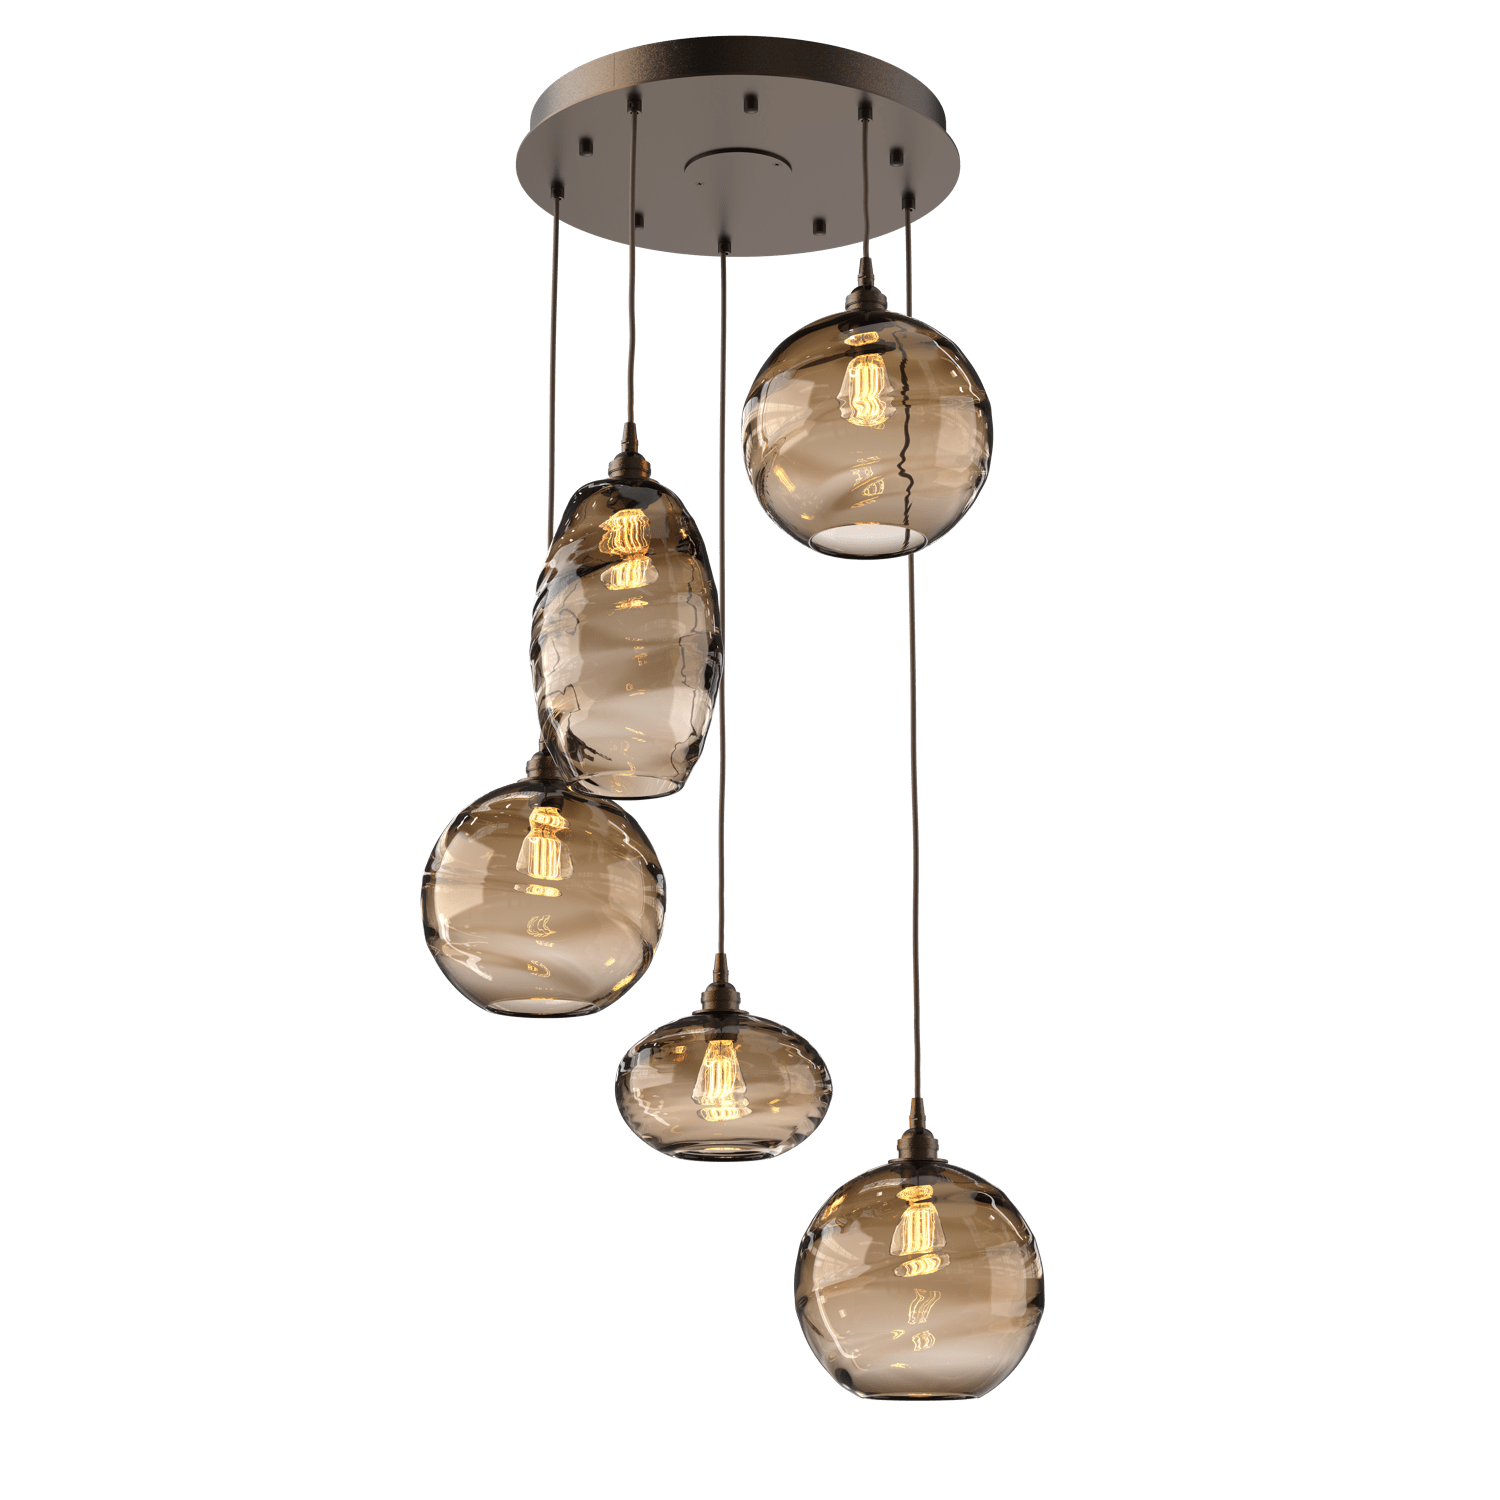 CHB0048-05-FB-OB-Hammerton-Studio-Optic-Blown-Glass-Misto-5-light-round-pendant-chandelier-with-flat-bronze-finish-and-optic-bronze-blown-glass-shades-and-incandescent-lamping